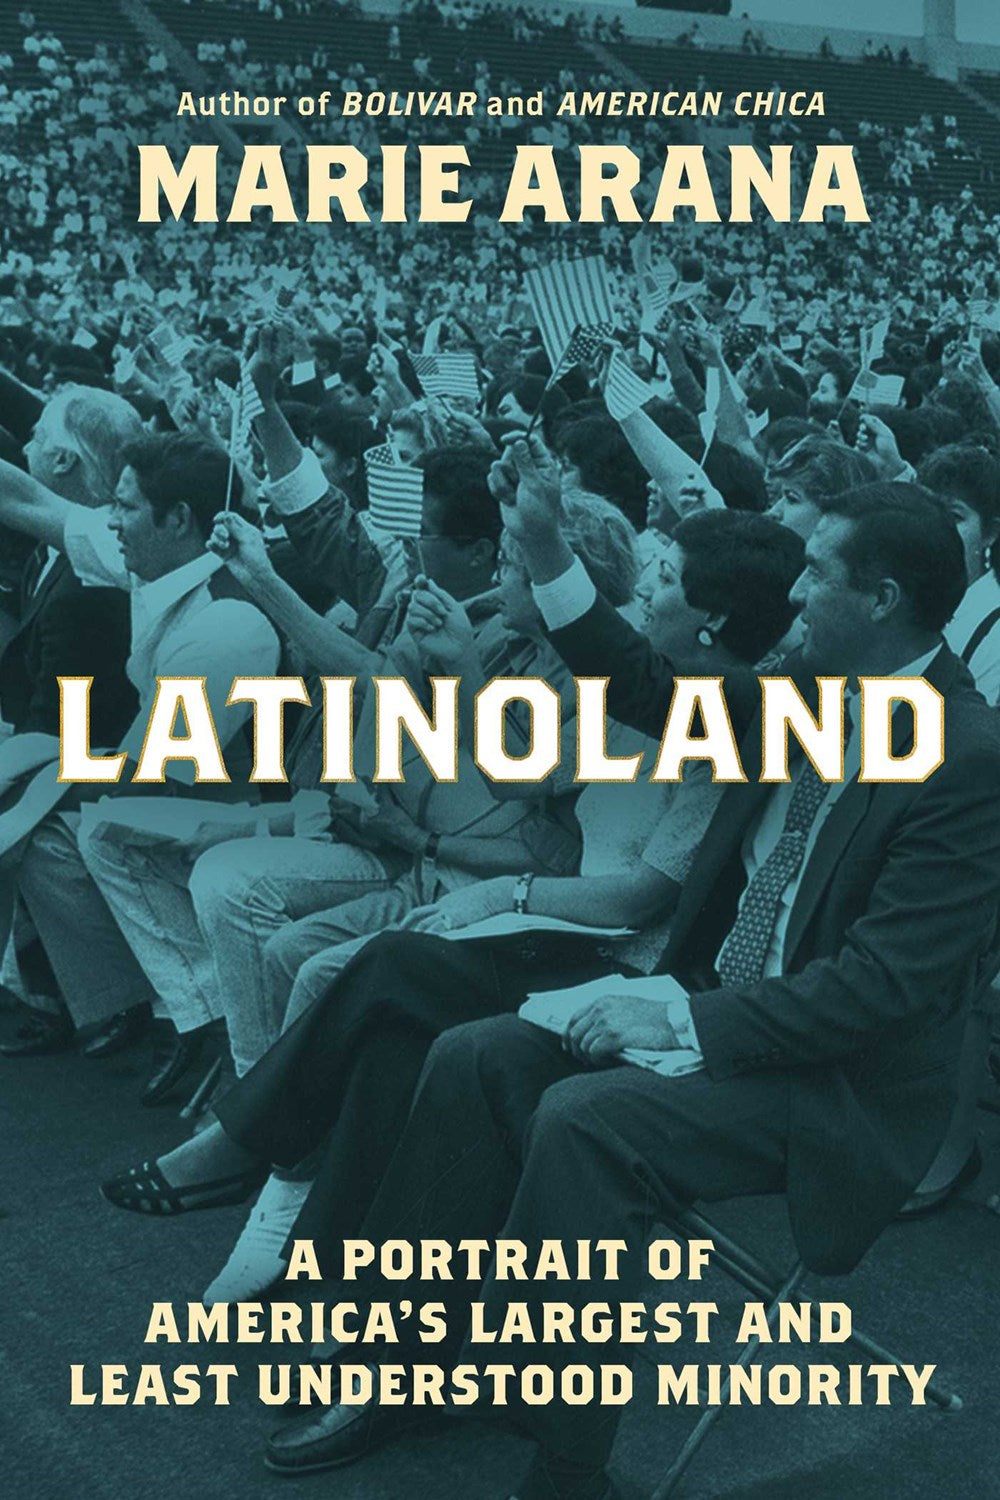 LatinoLand: A Portrait of America's Largest and Least Understood Minority